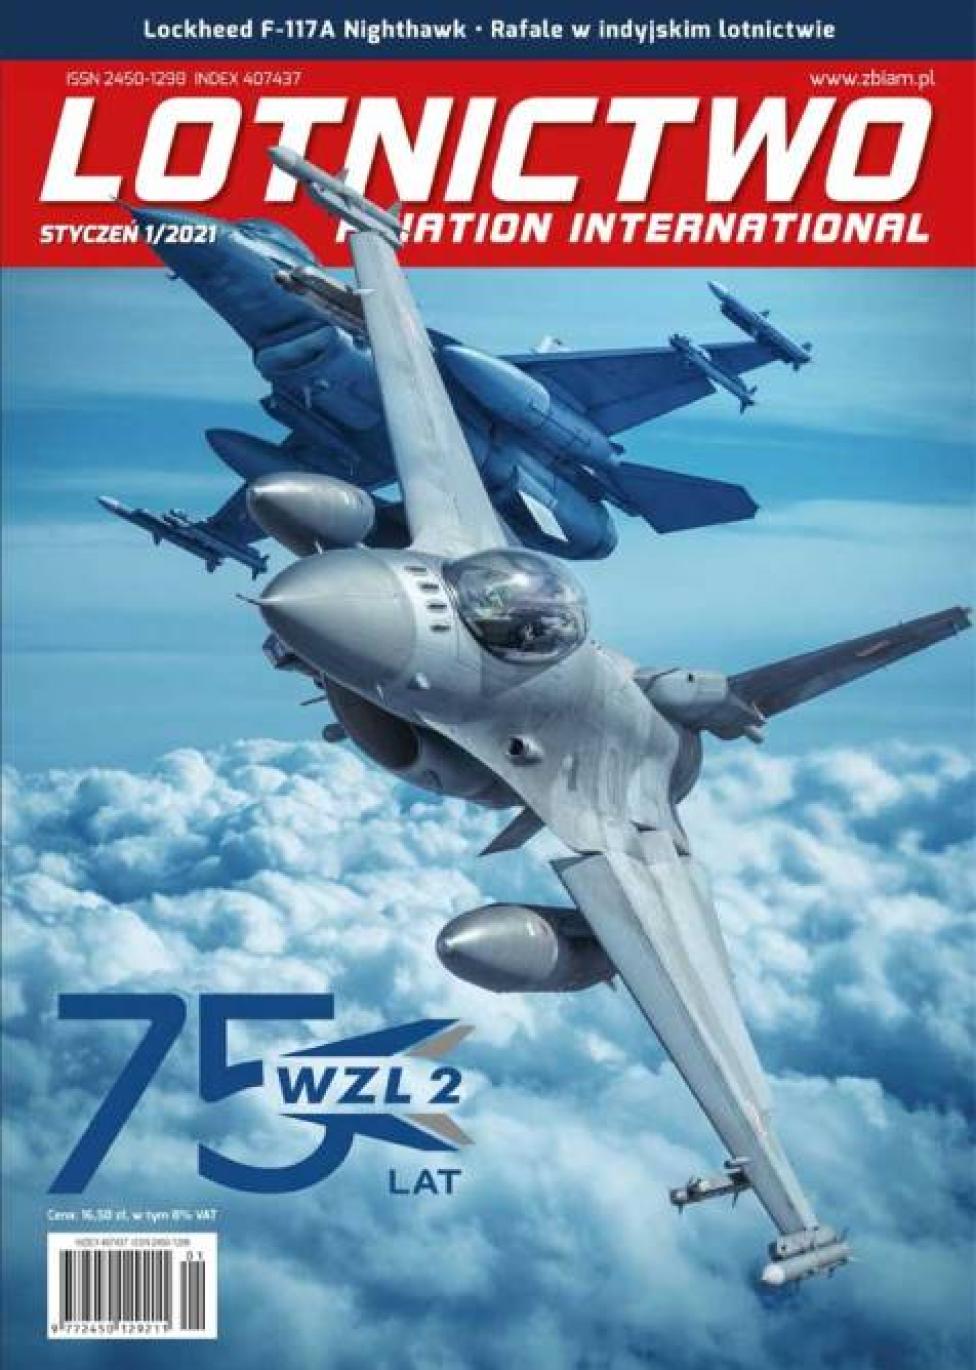 Lotnictwo Aviation International 1/2021